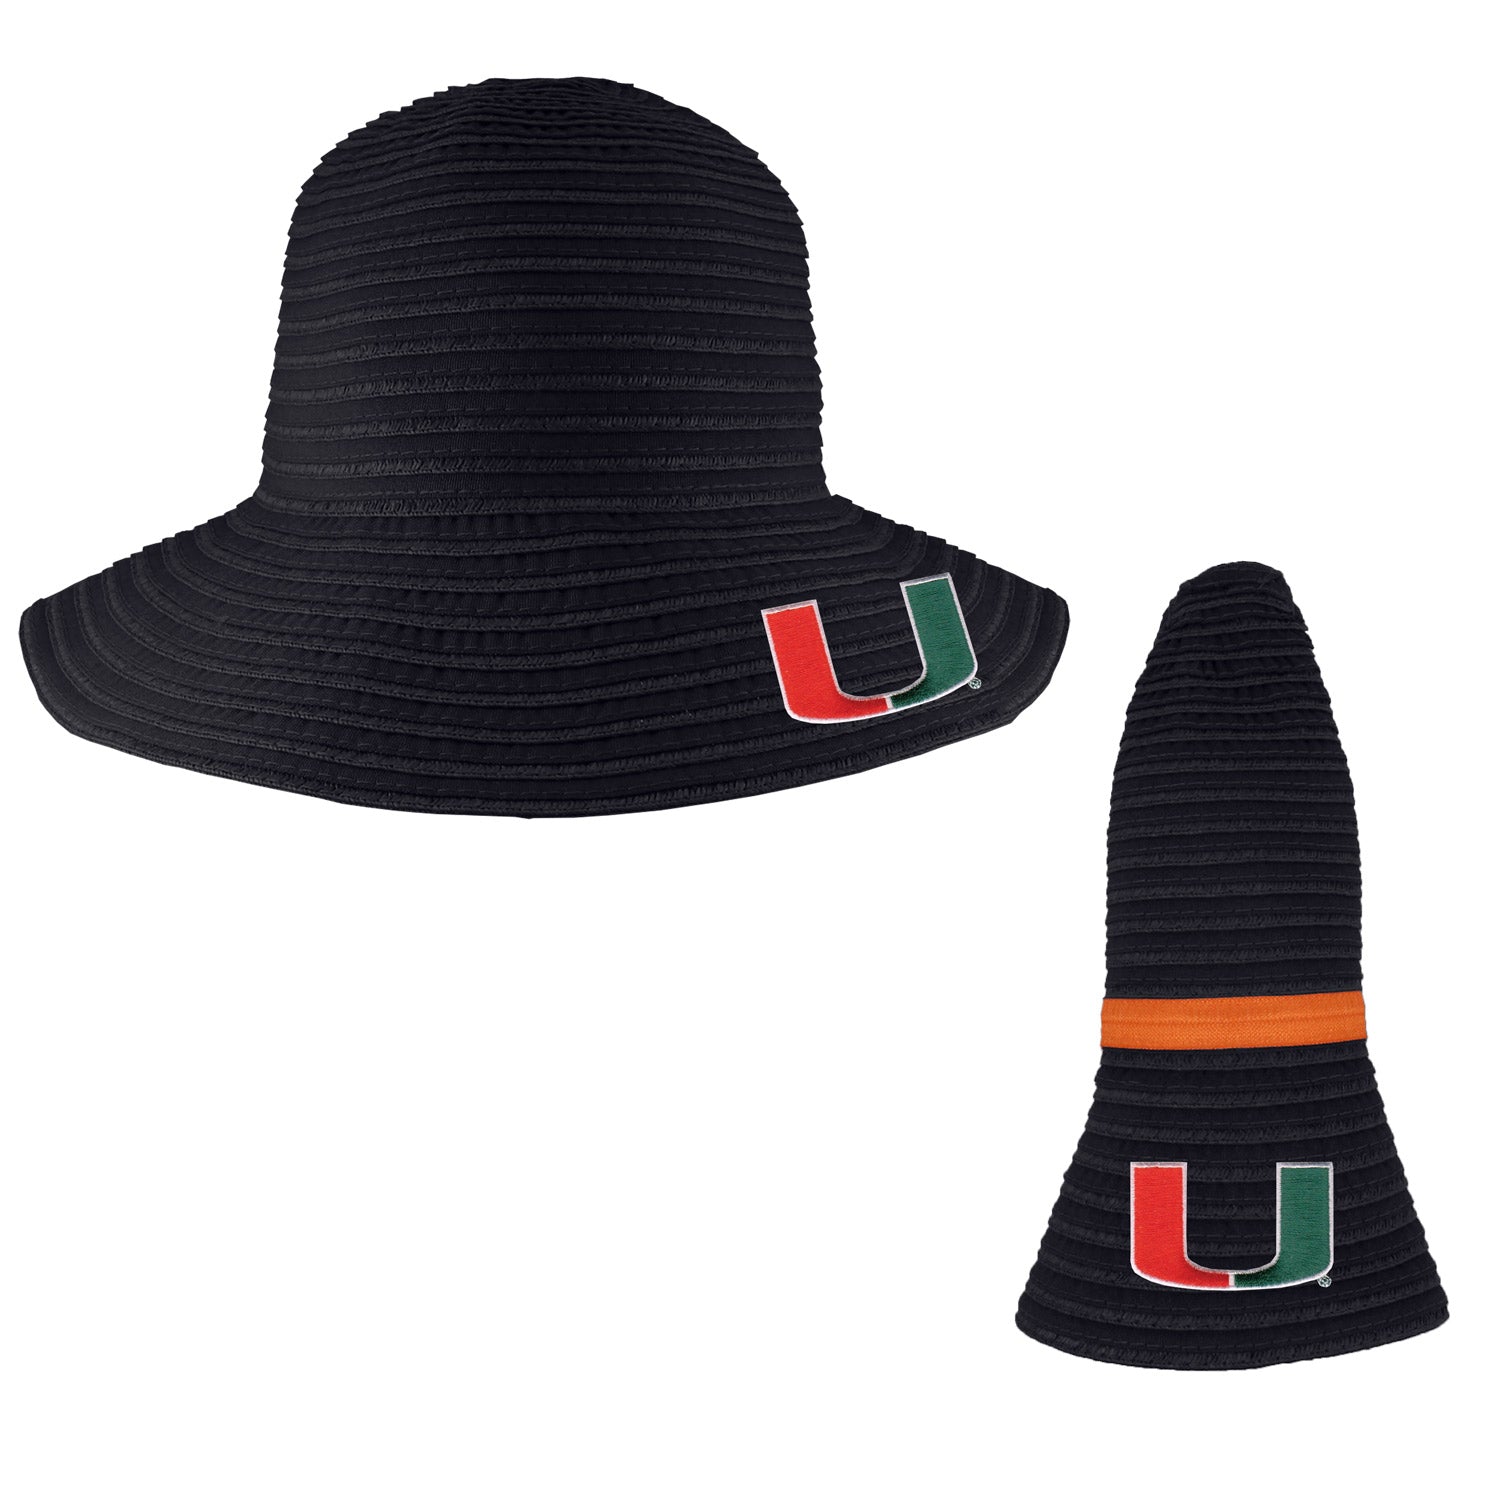 Miami Hurricanes Collapsible Travel Sun Hat - Amelia - Black